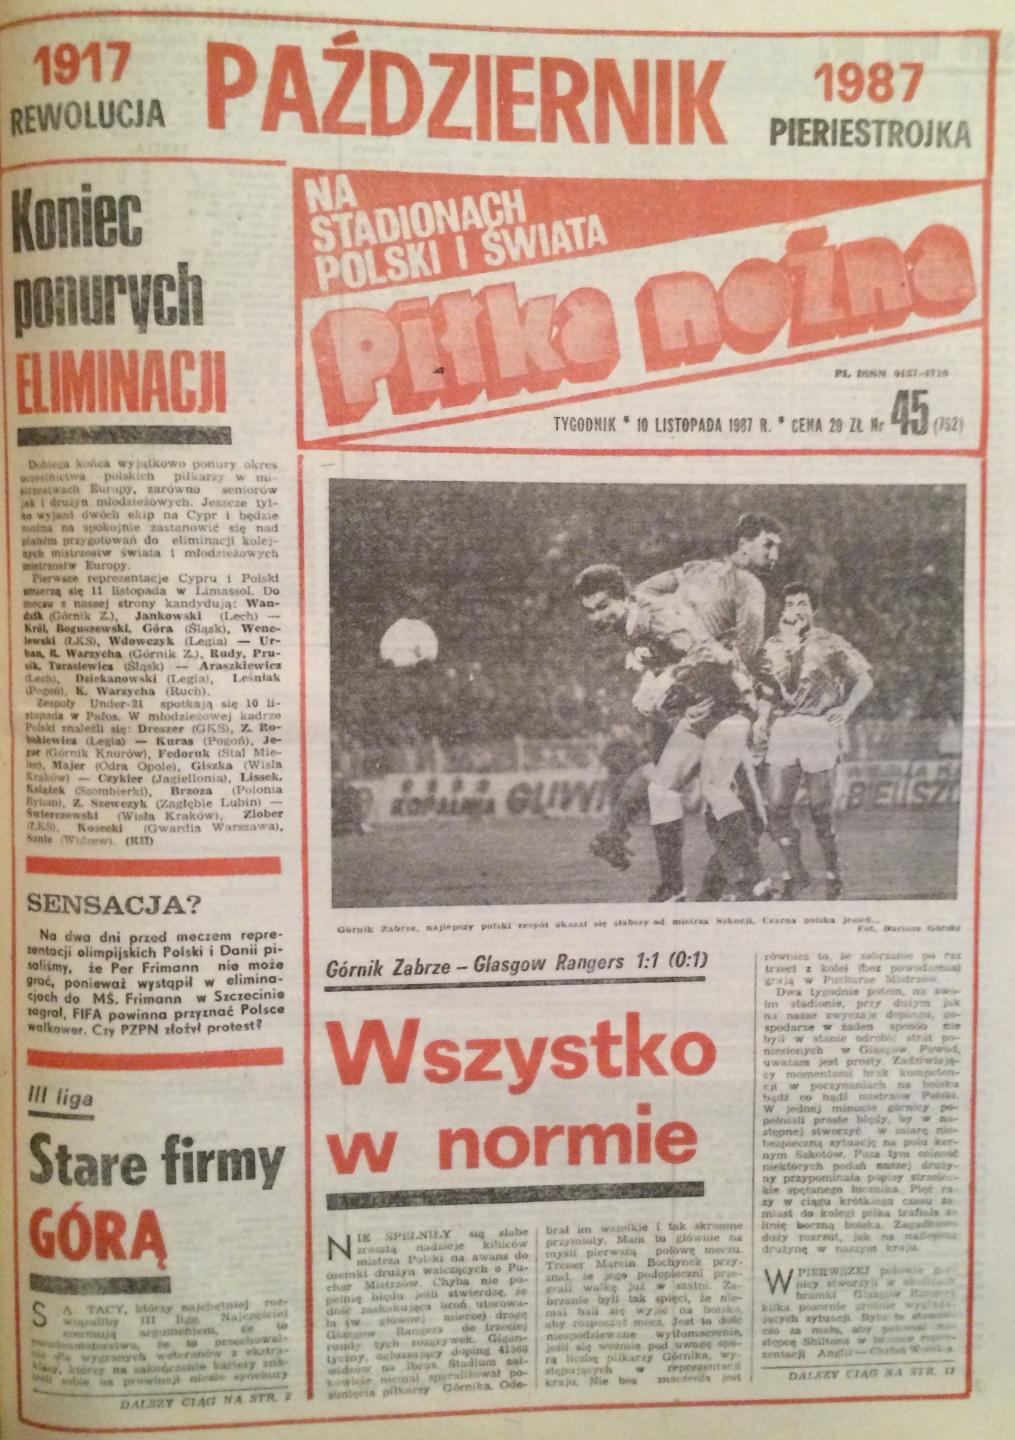 Piłka Nożna po Górnik Zabrze - Rangers FC 1:1 (04.11.1987) 1